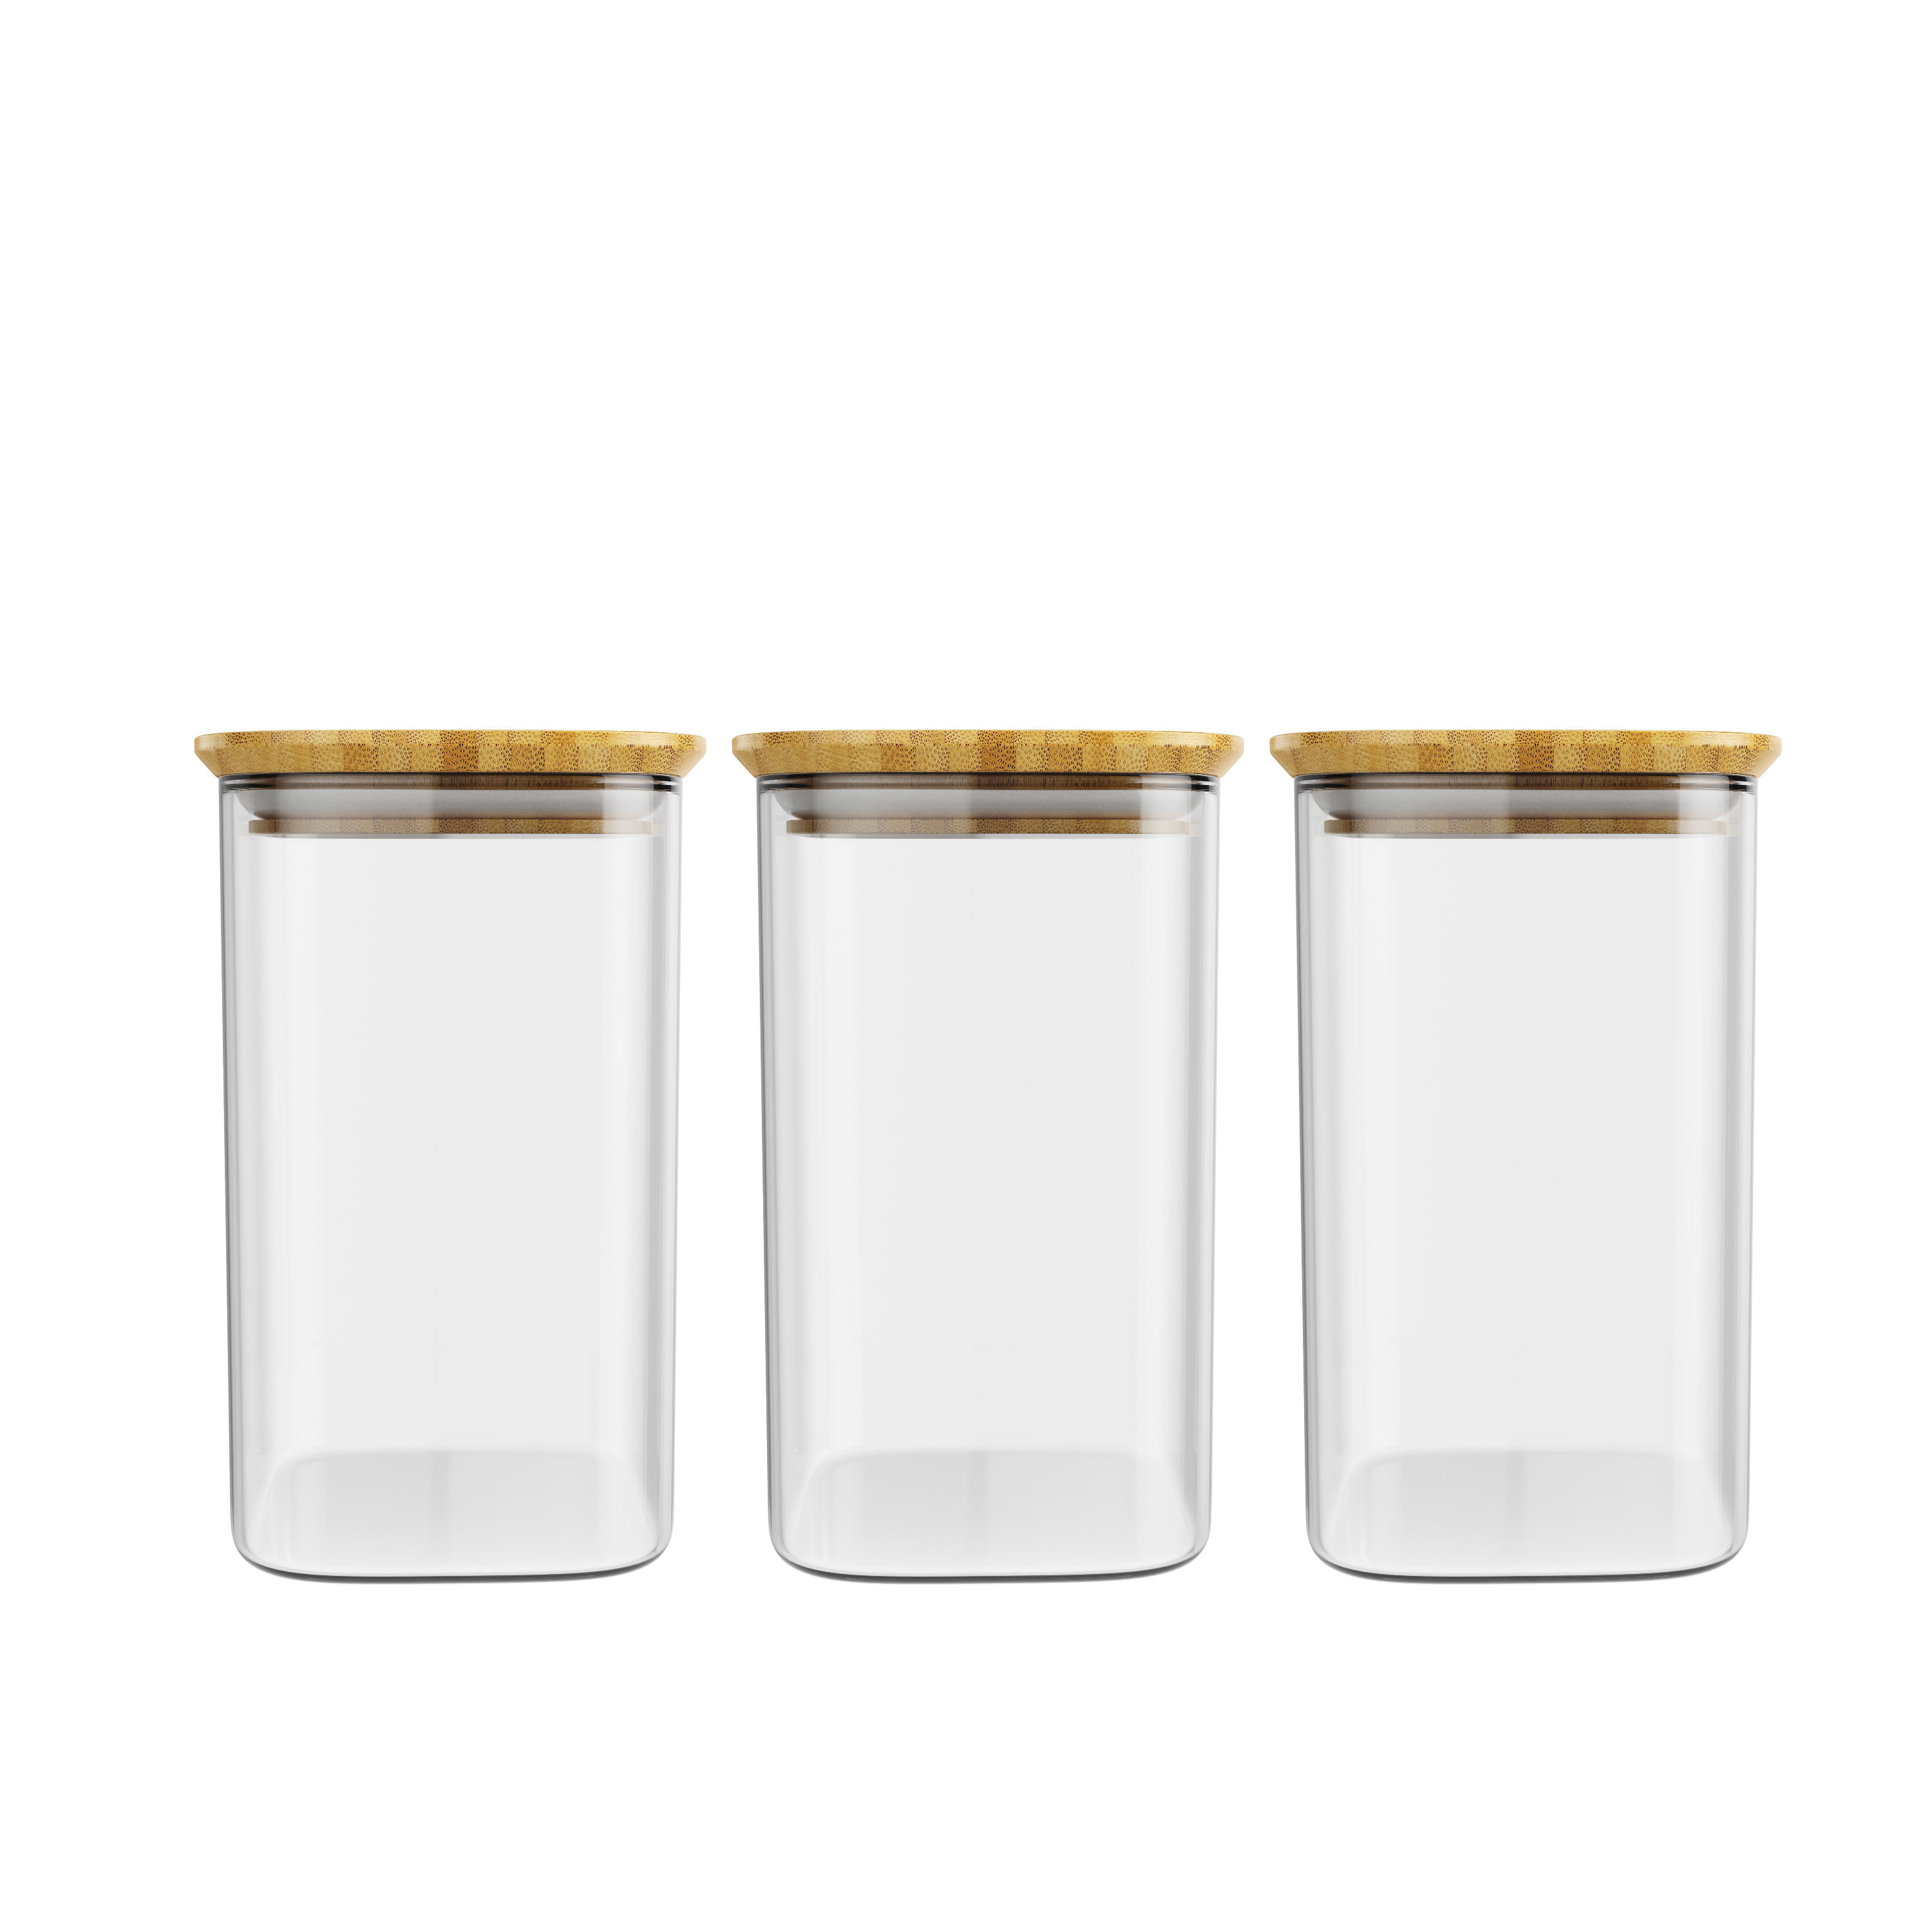 Storage jars set of 3 1400ml